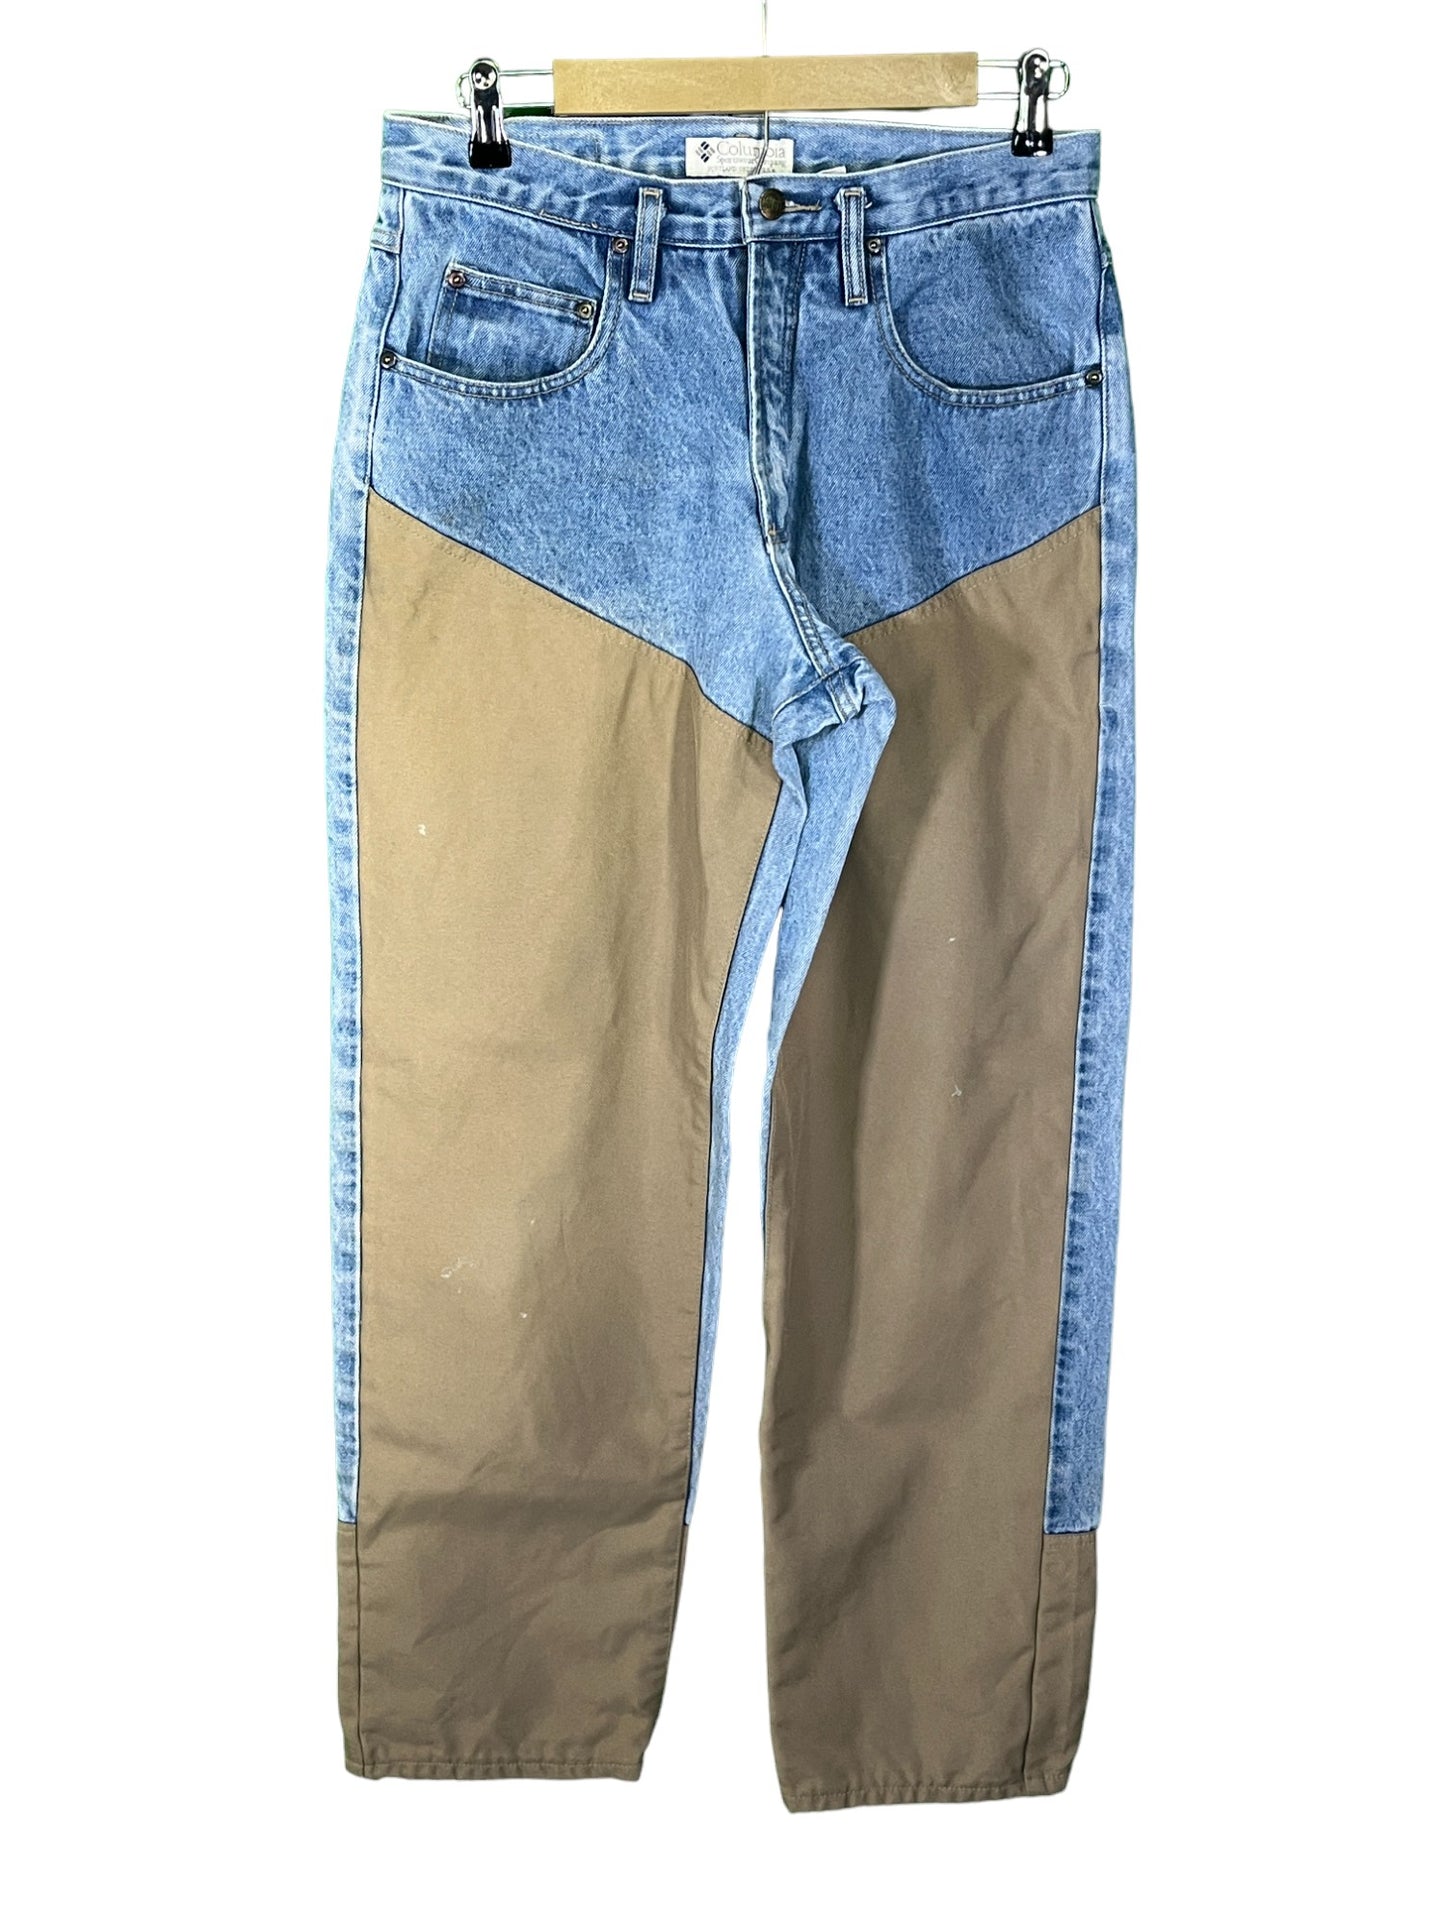 Vintage Colombia Double Knee Outdoor Denim Jeans Size 31x32